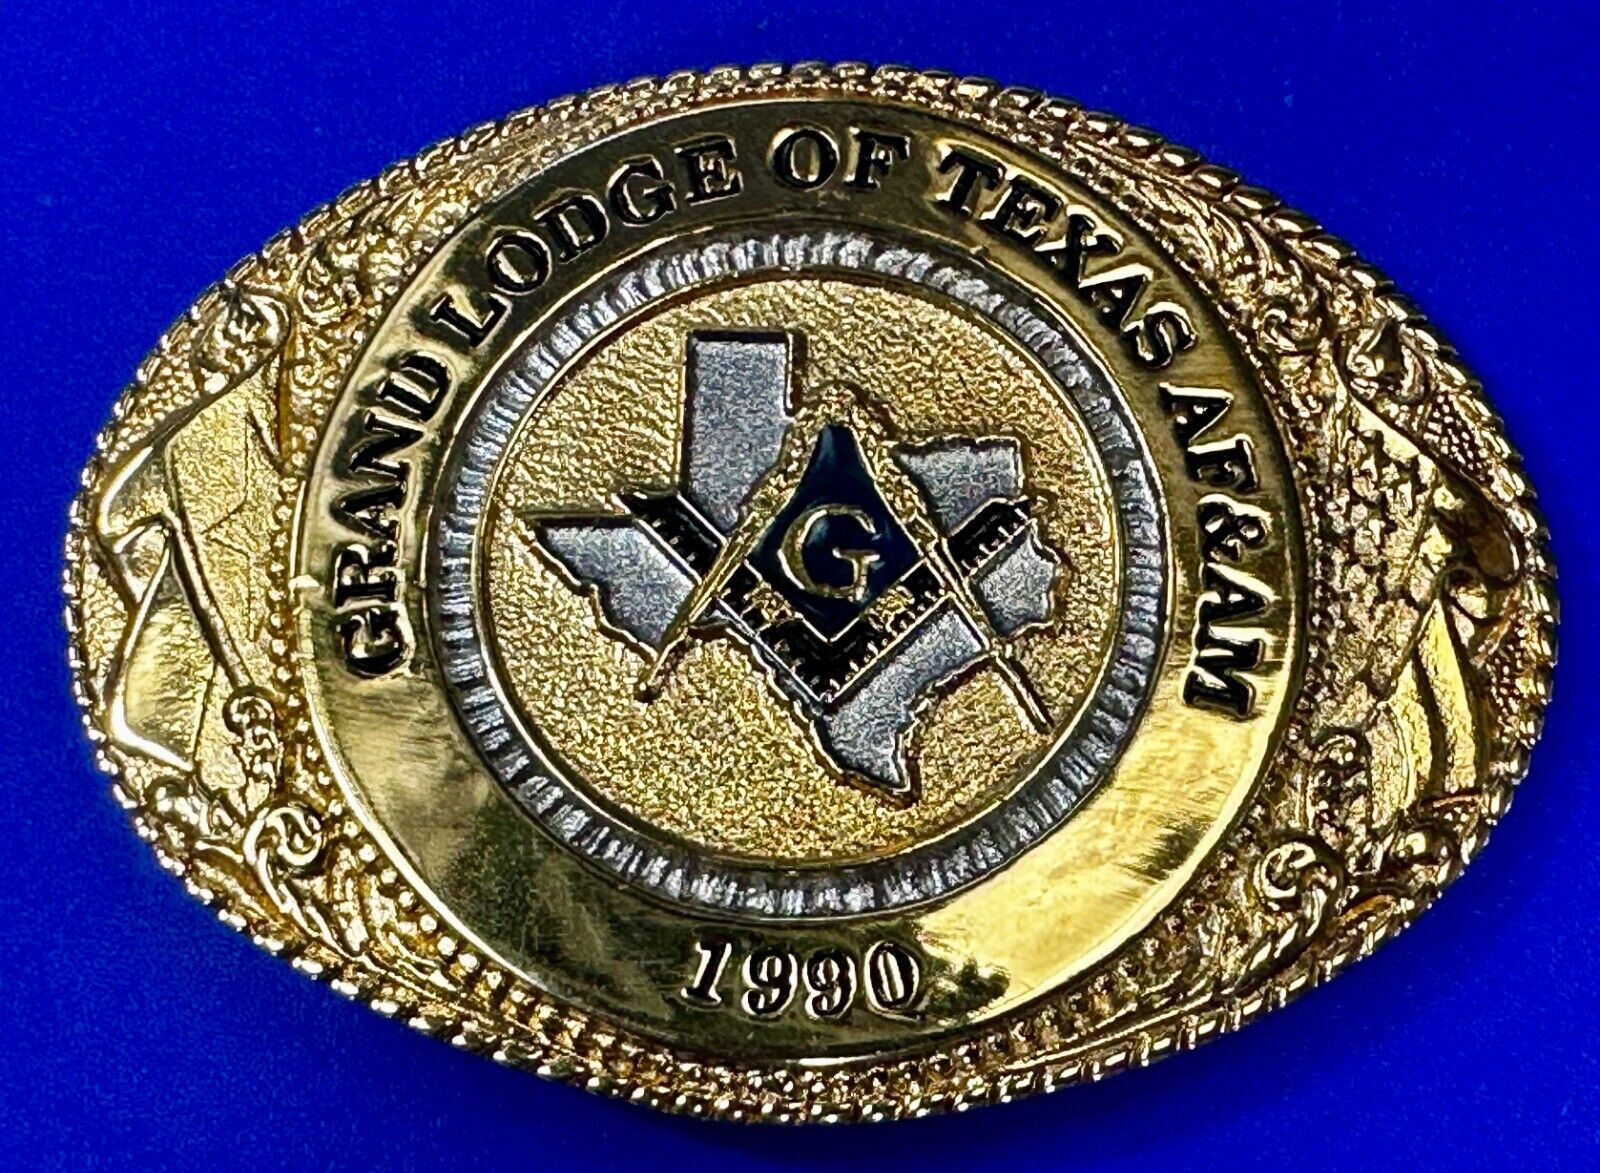 Masons Grand Lodge of Texas AF&AM Vintage 1990 Belt Buckle by TL&B